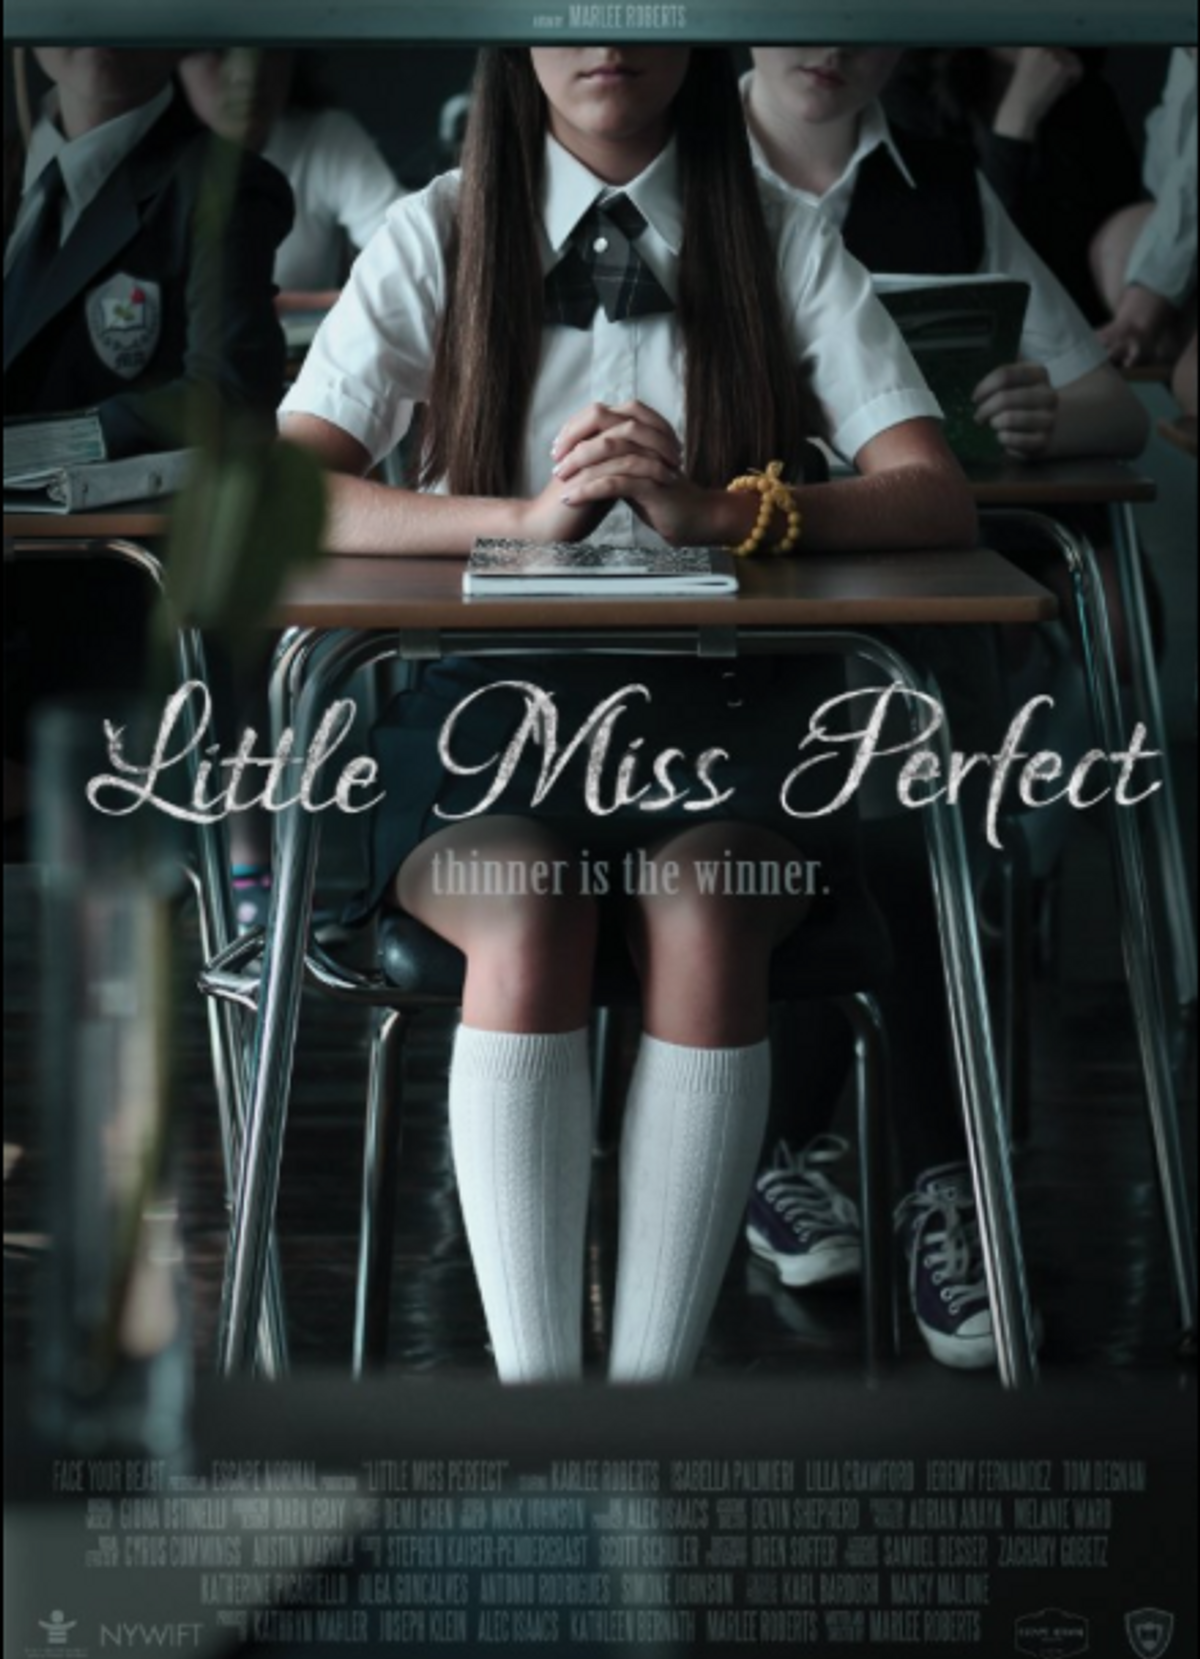 SOHO International Film Festival: Little Miss Perfect's NYC Premiere